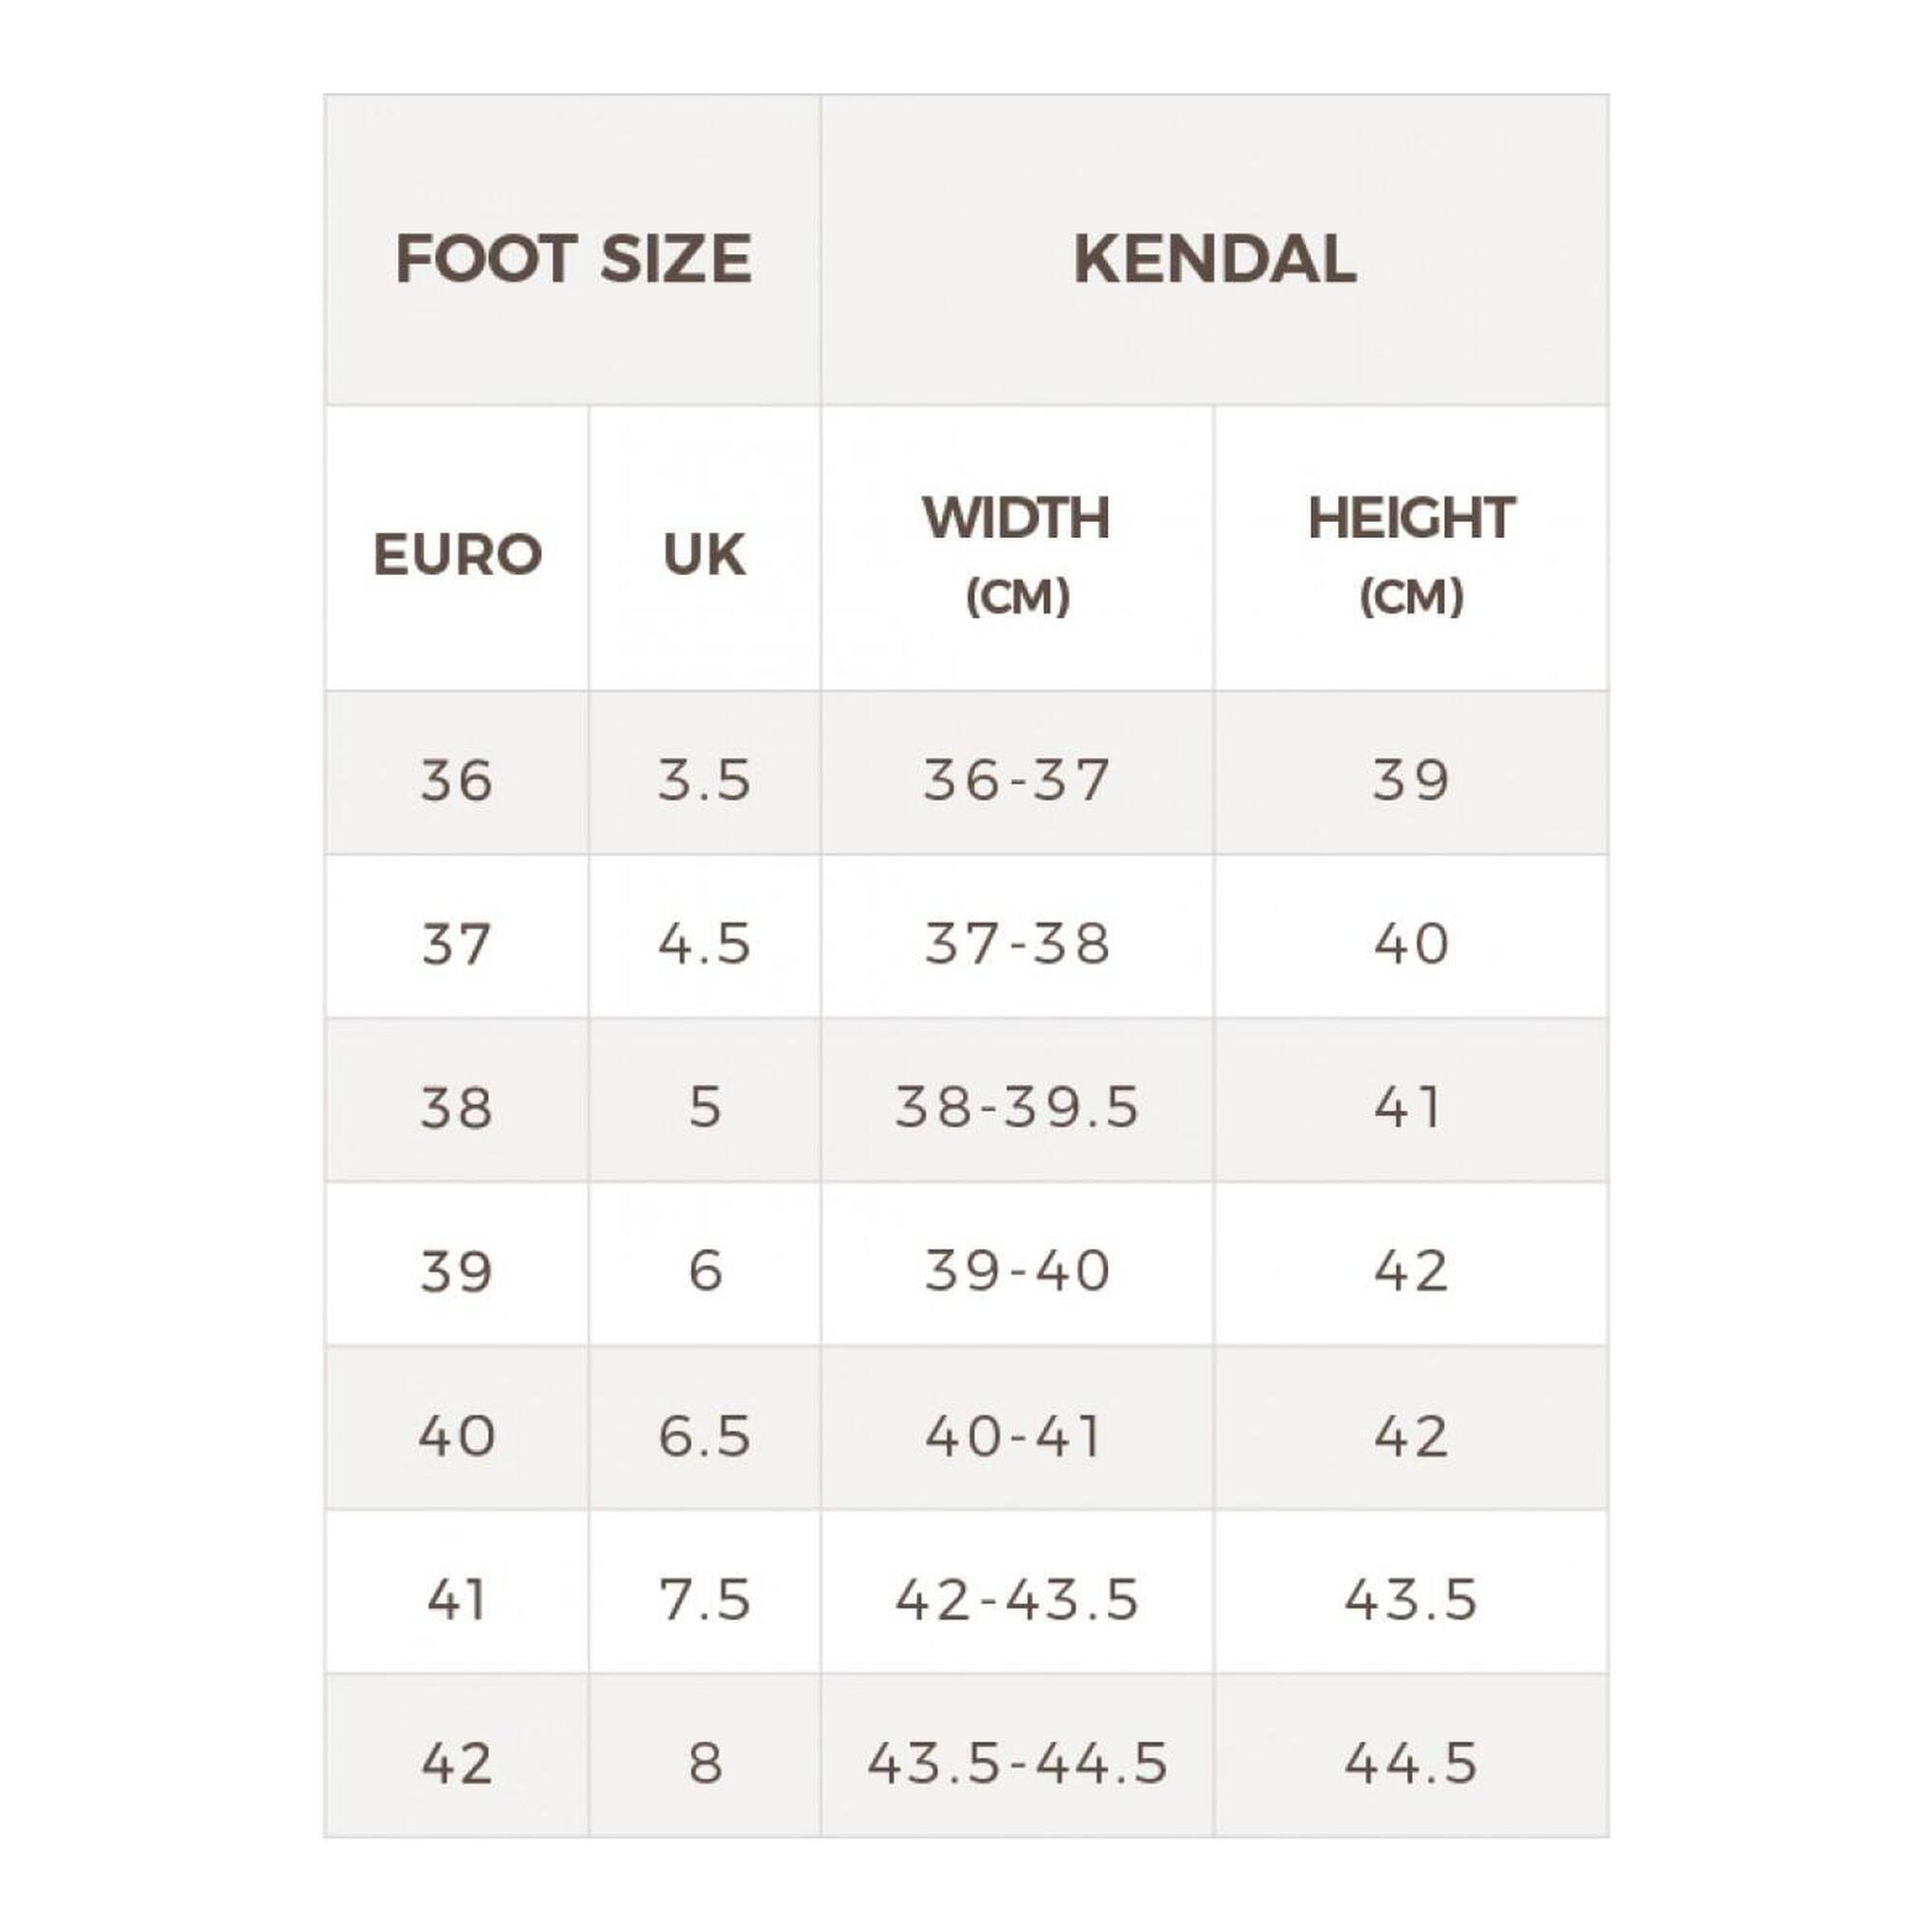 Kendal Sub-Zero Tall Boot 3/3